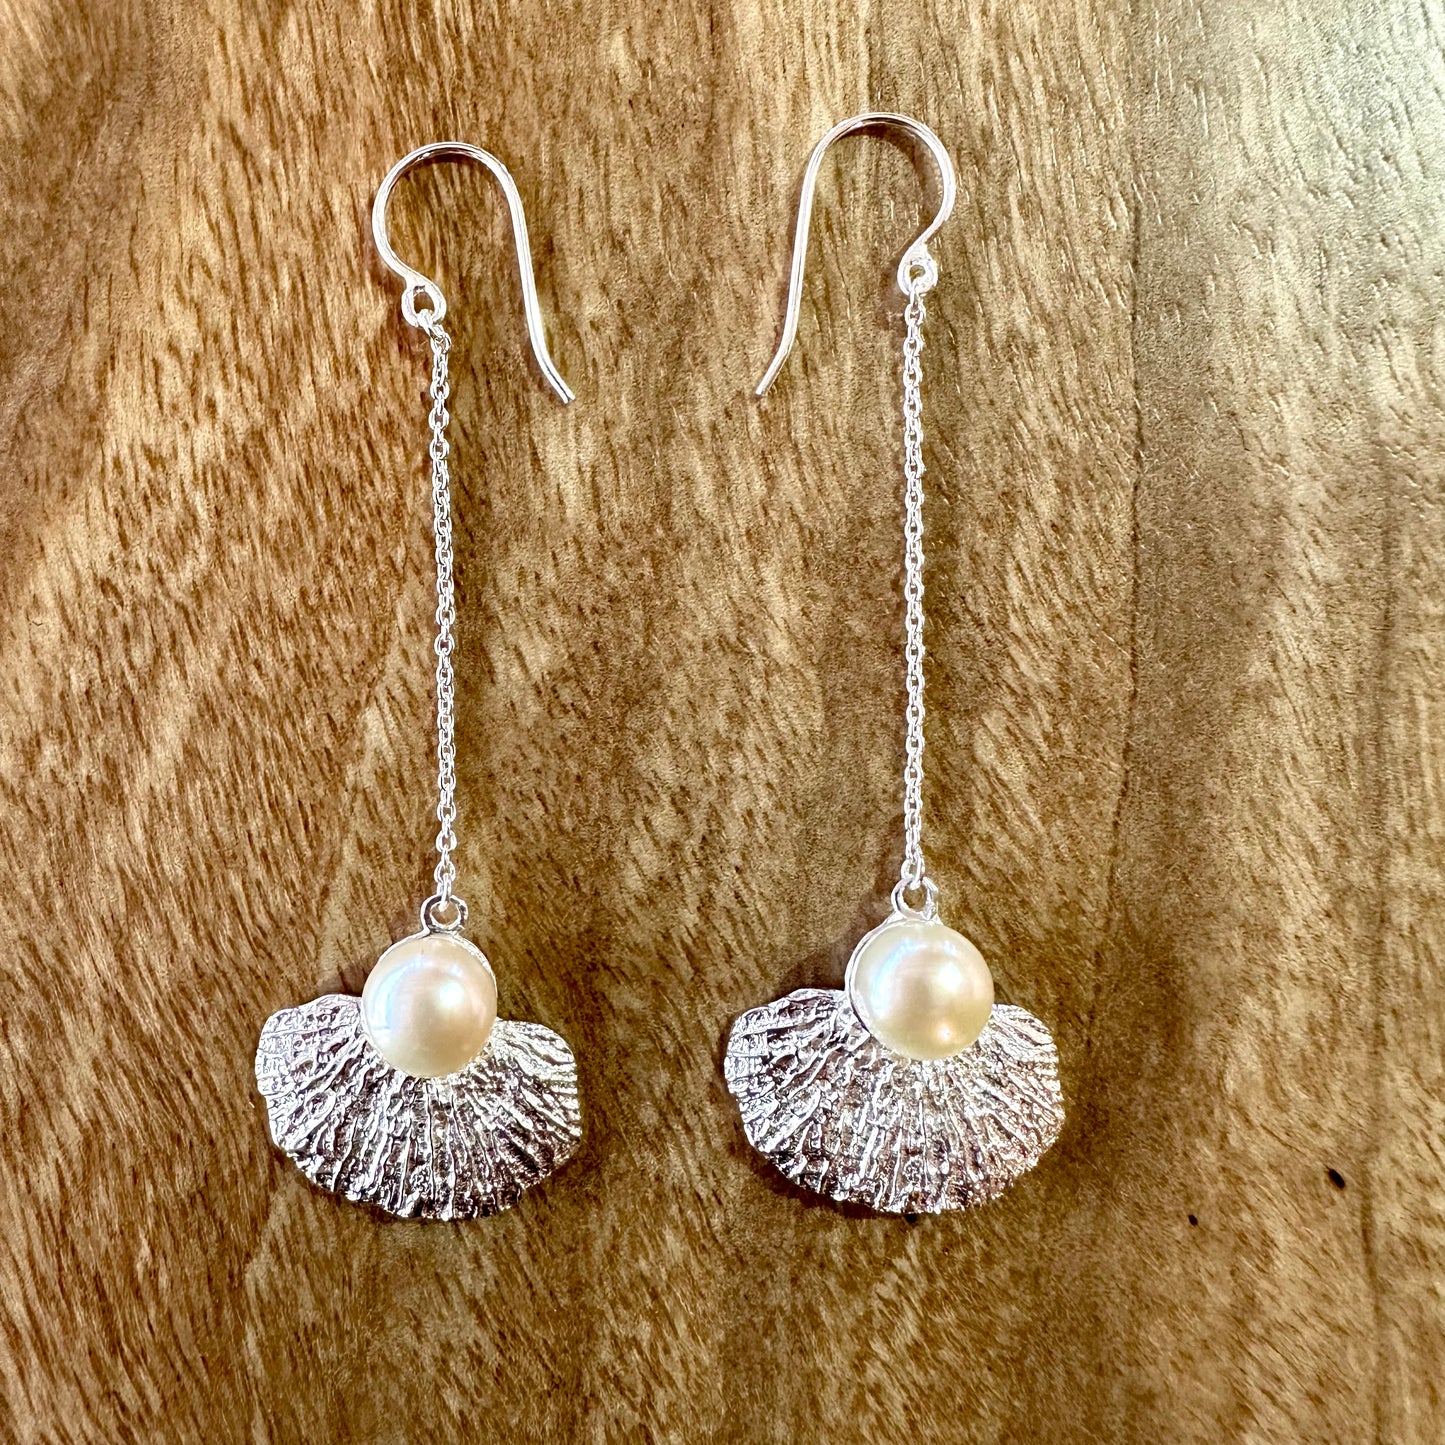 Earrings - Coral Garden Long Drop with Fresh Water Pearl